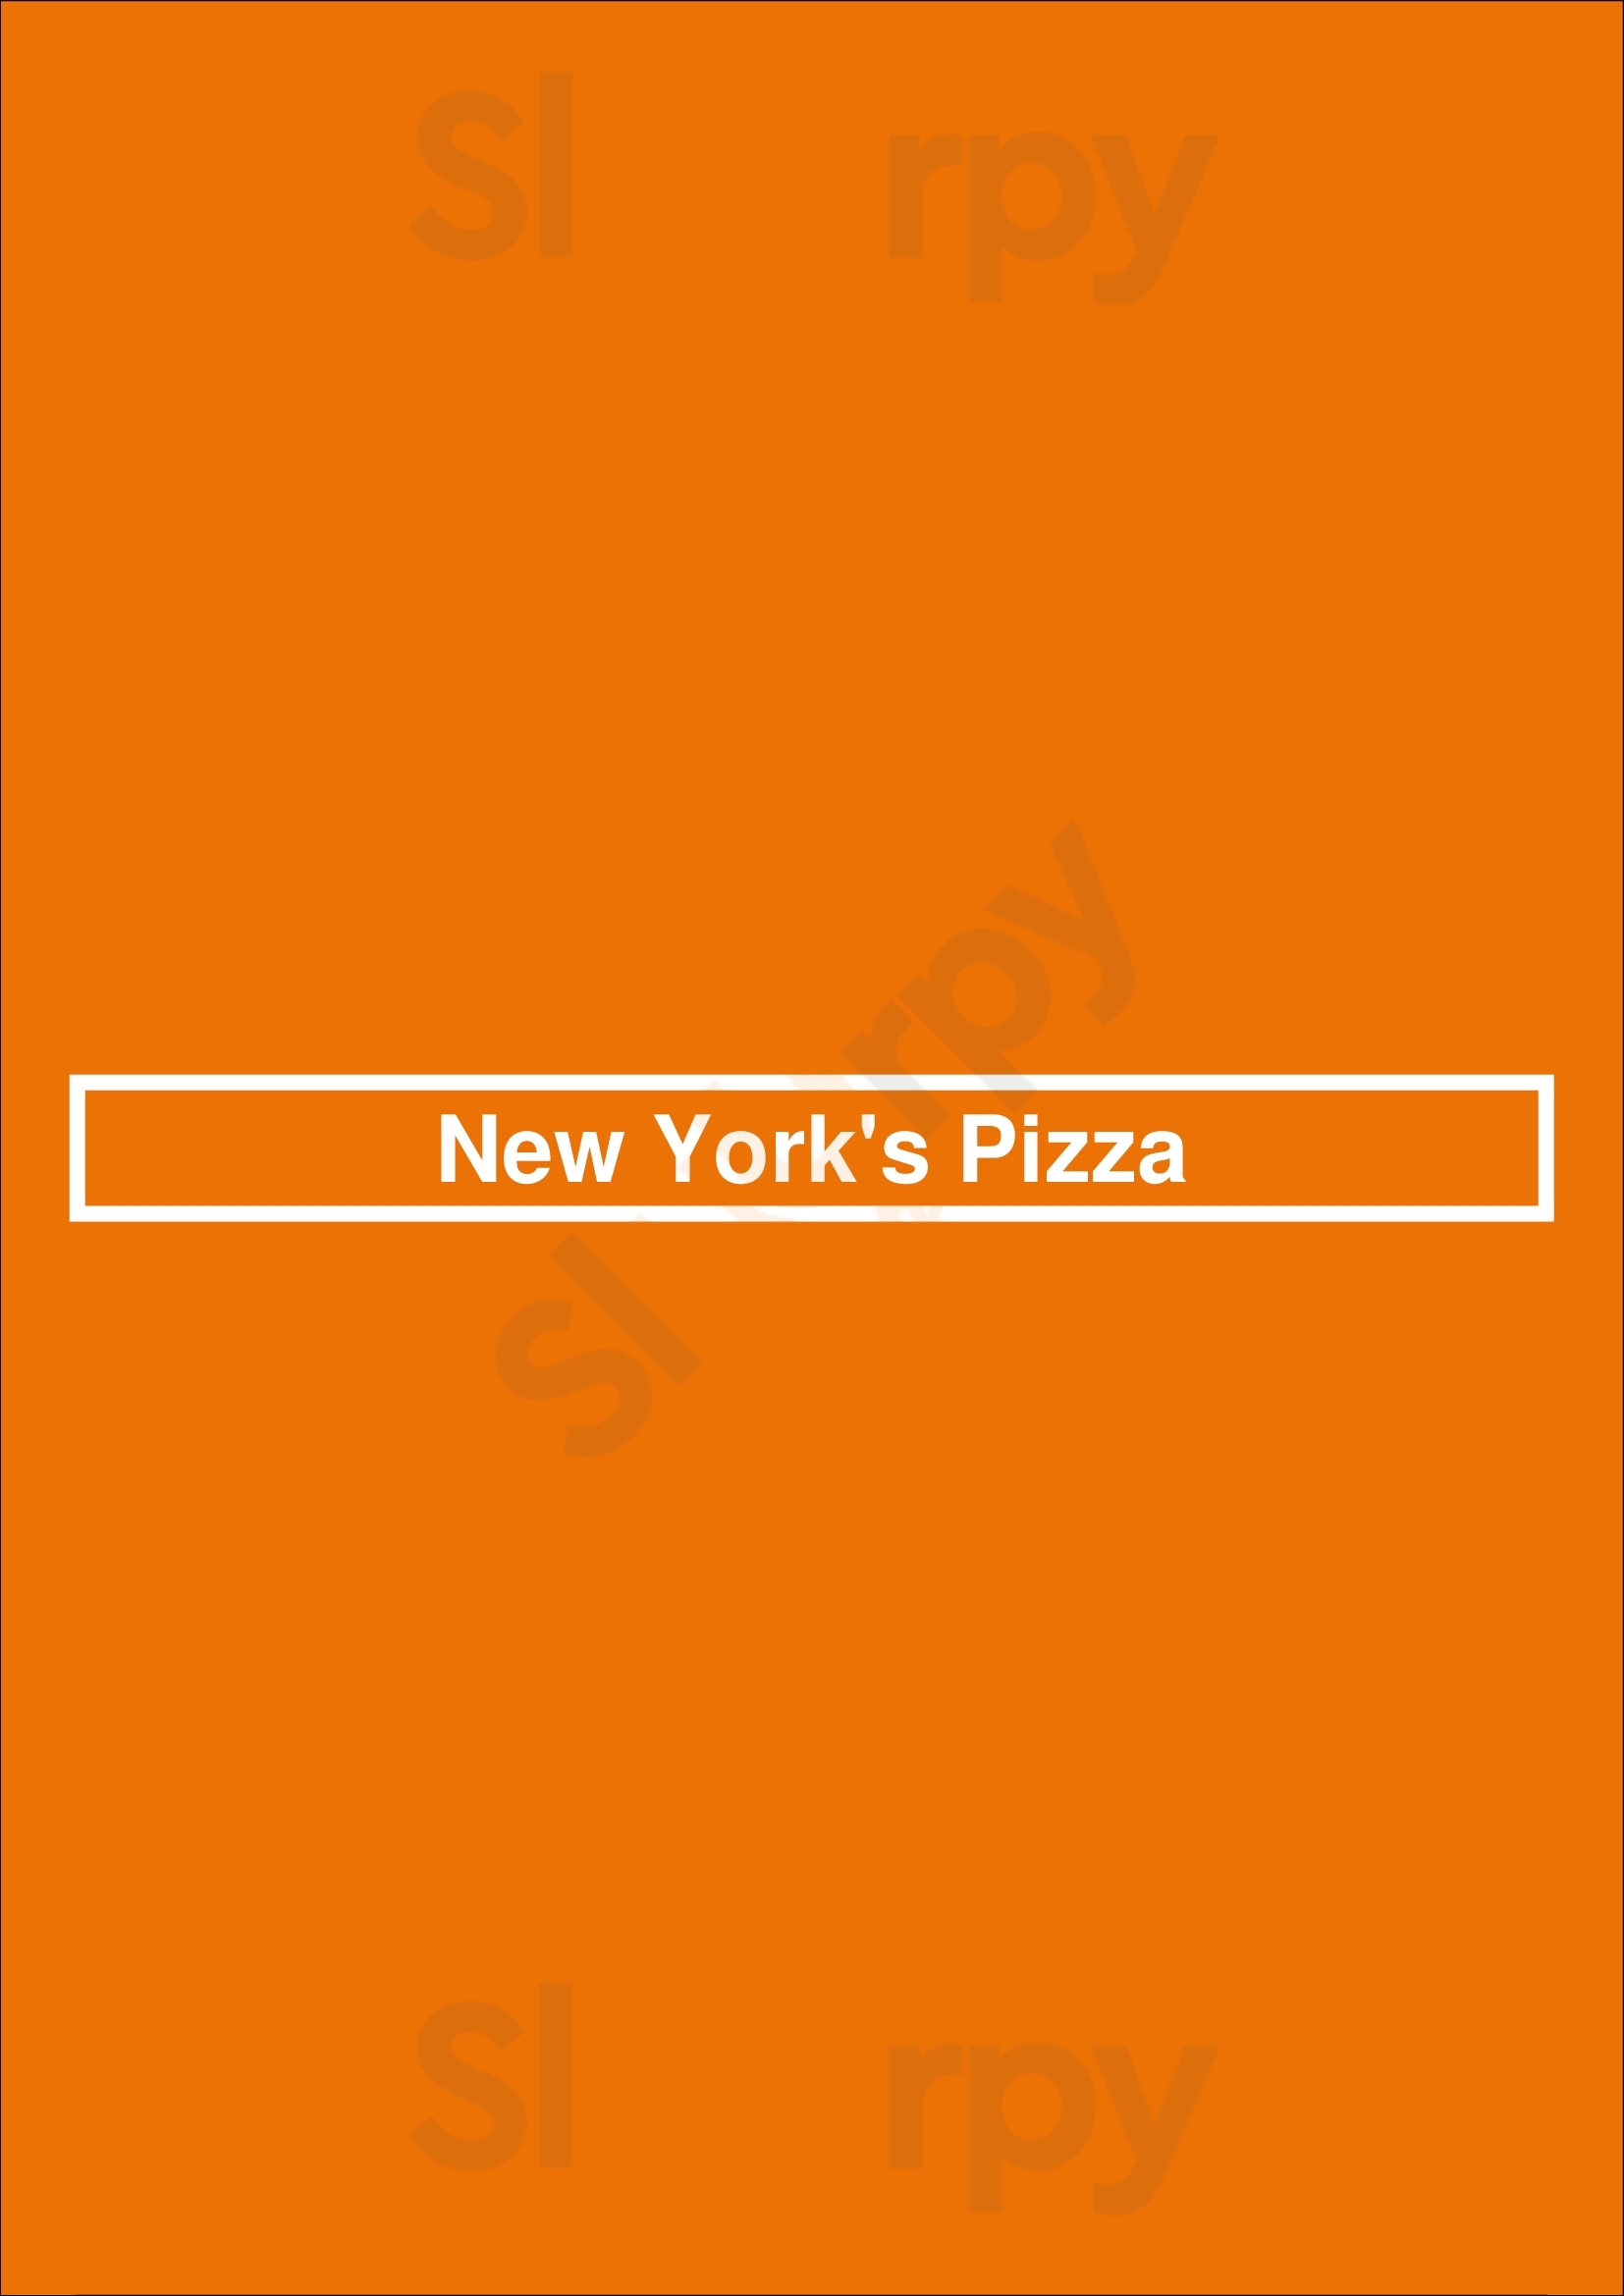 New York's Pizza Cardiff Menu - 1